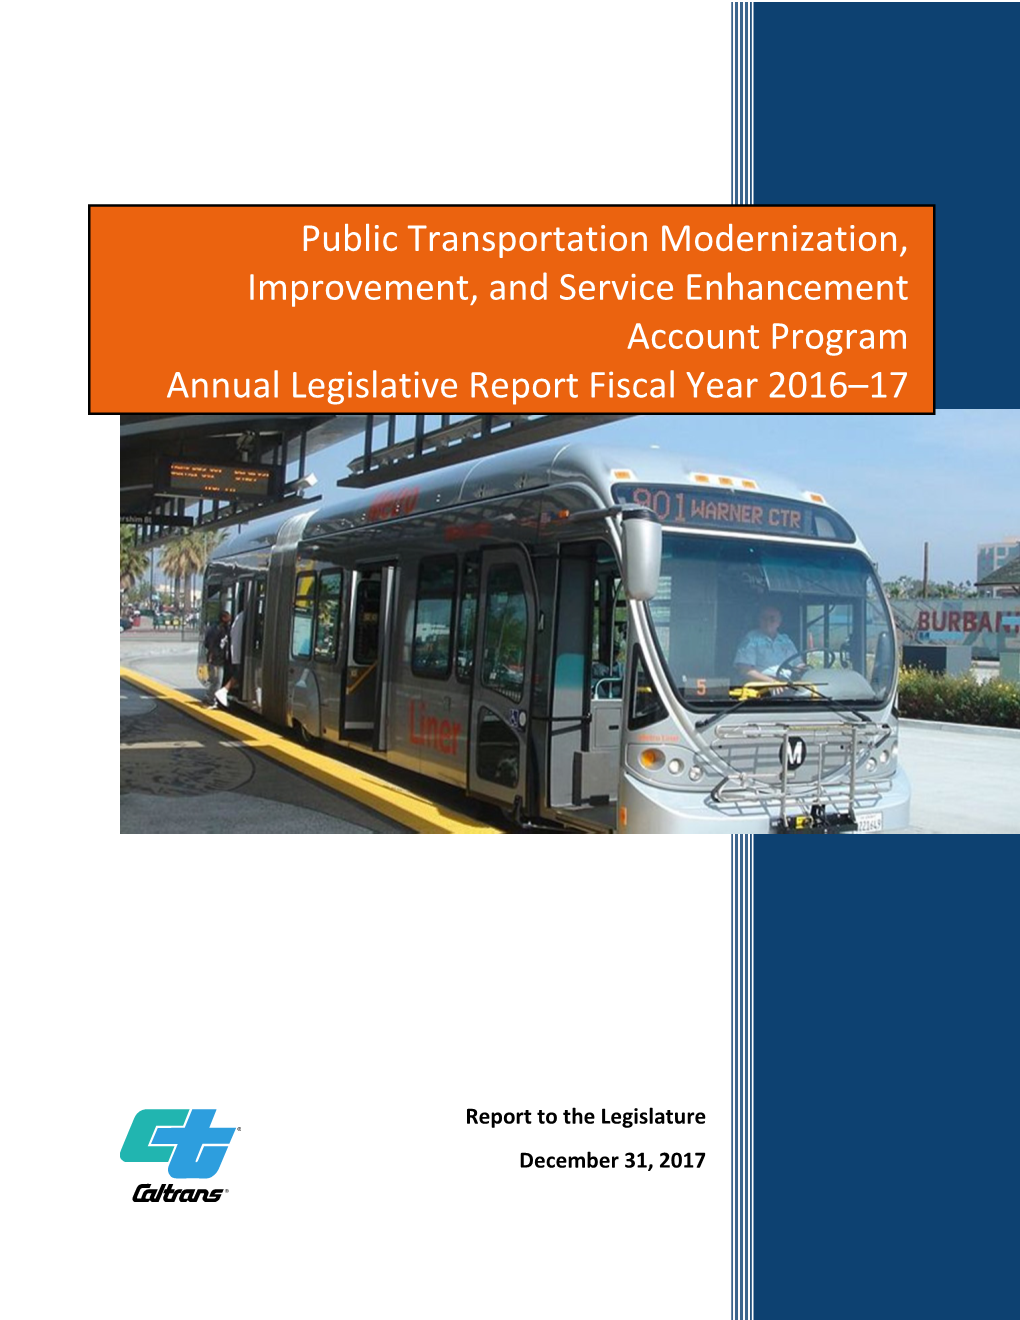 Public Transportation Modernization, Improvement, and Service Enhancement Account Program